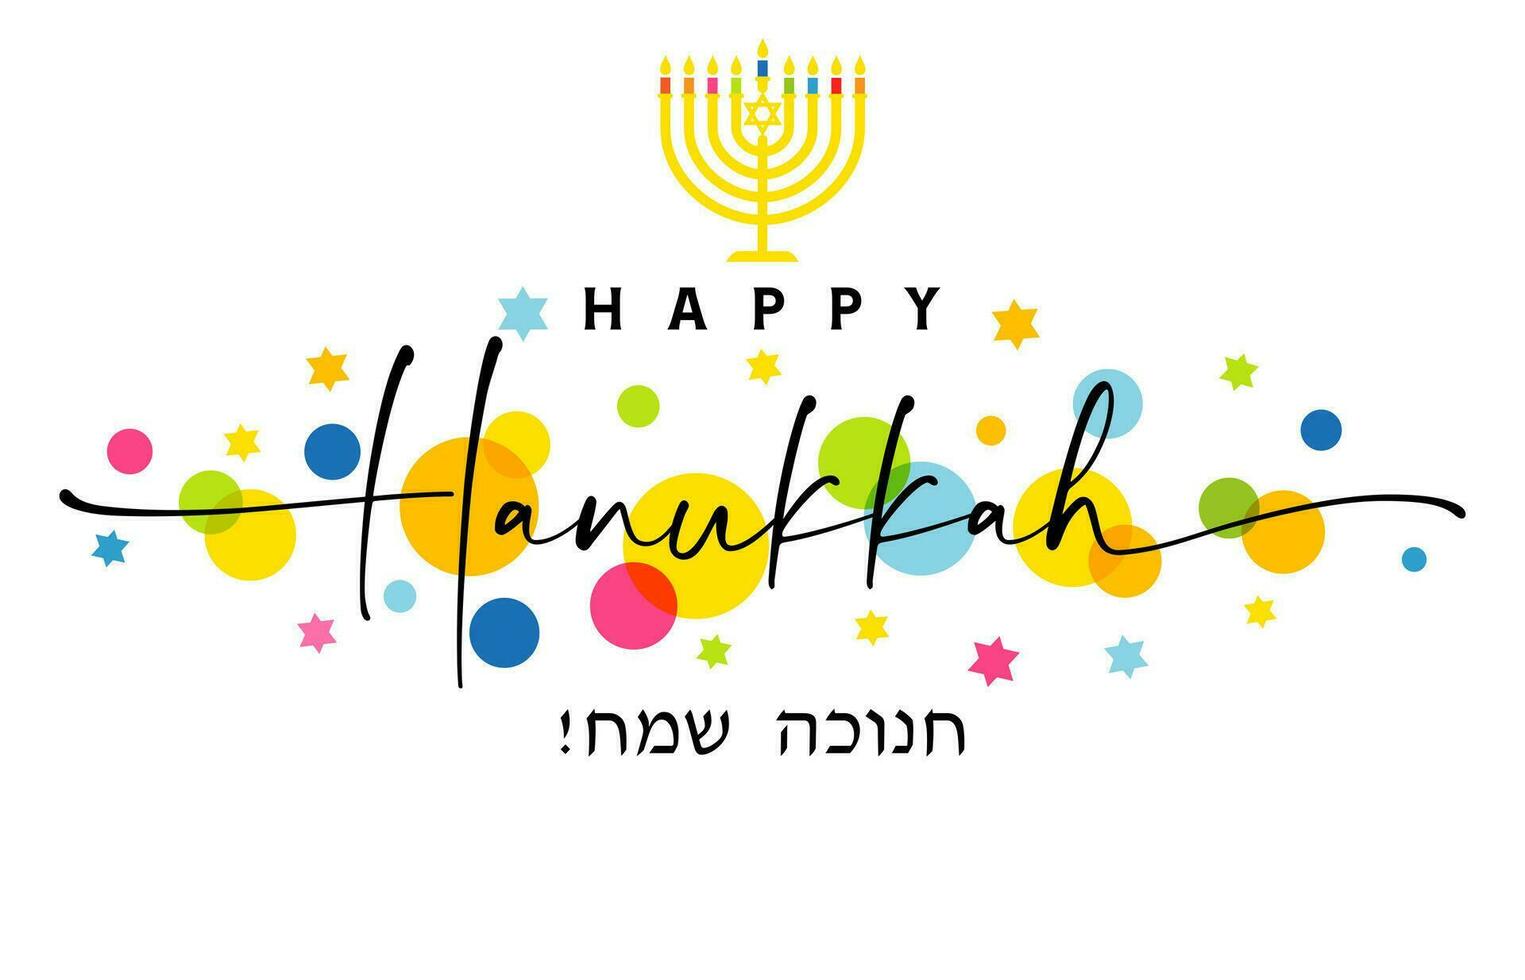 contento hanukkah elegante scritte, menorah e colorato stelle. ebraico testo - contento Hanukka, saluto carta design vettore